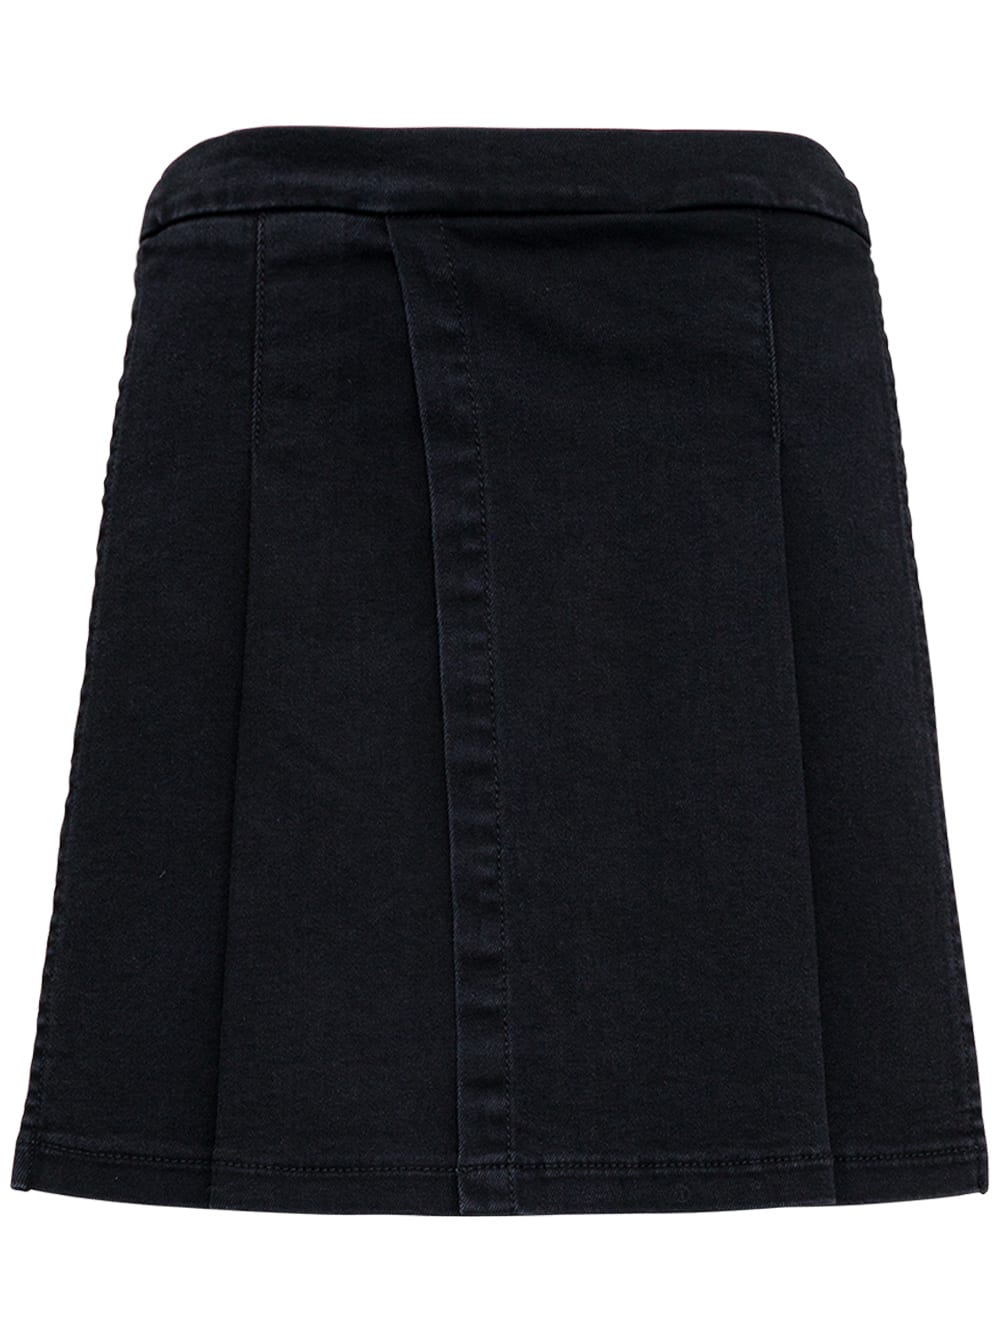 Philosophy di Lorenzo Serafini Pleated Denim Skirt With Metal Straps Detail